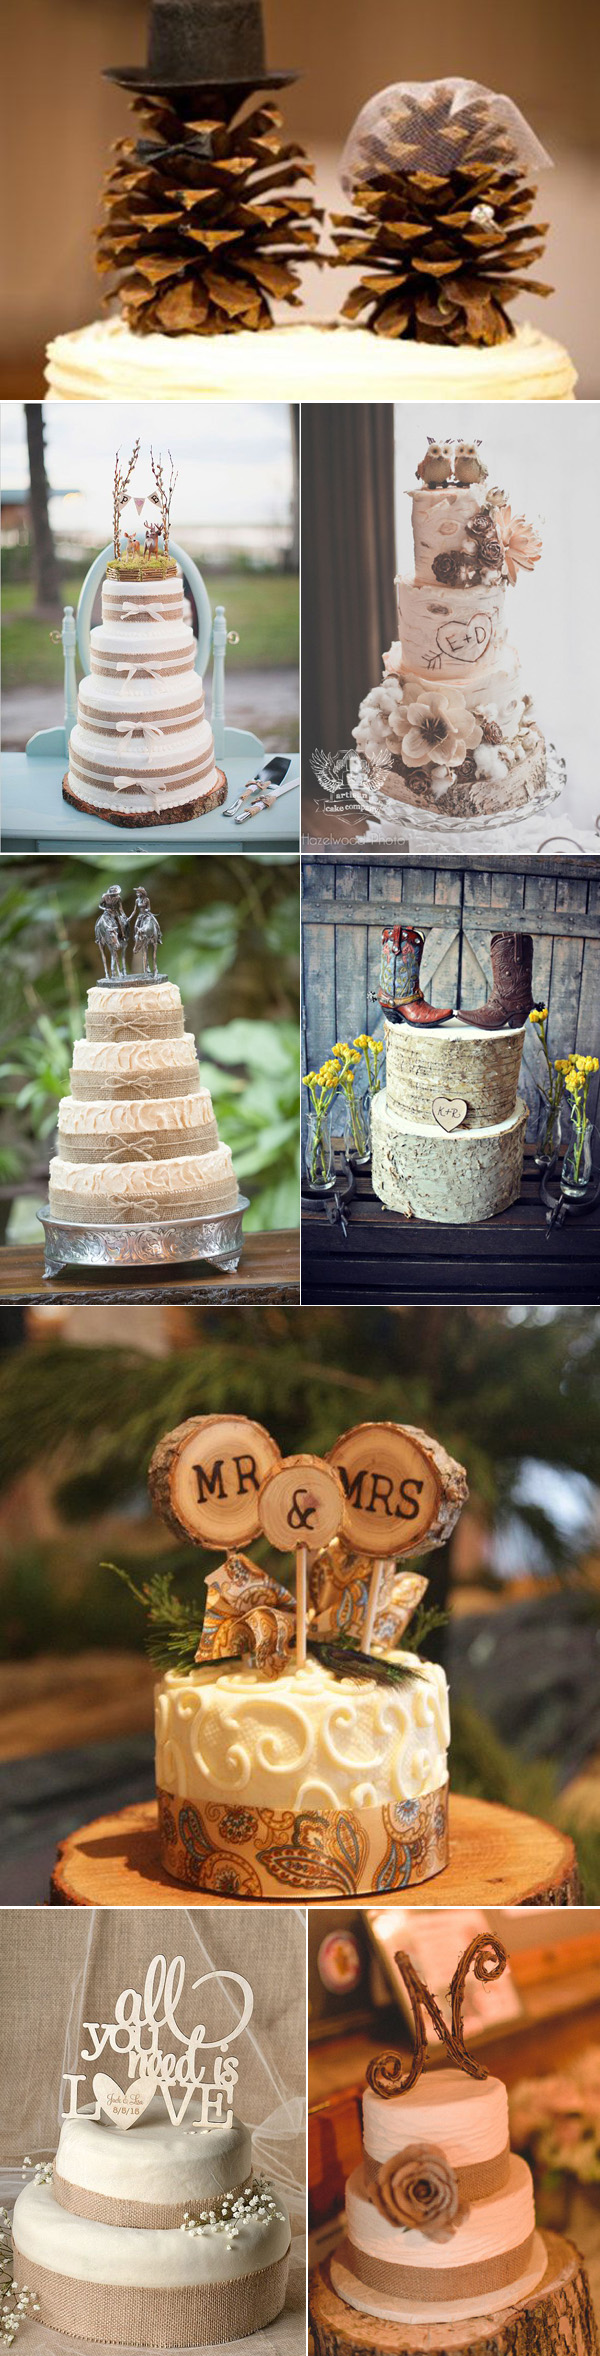 Rustic wedding ideas - rustic wedding cake toppers